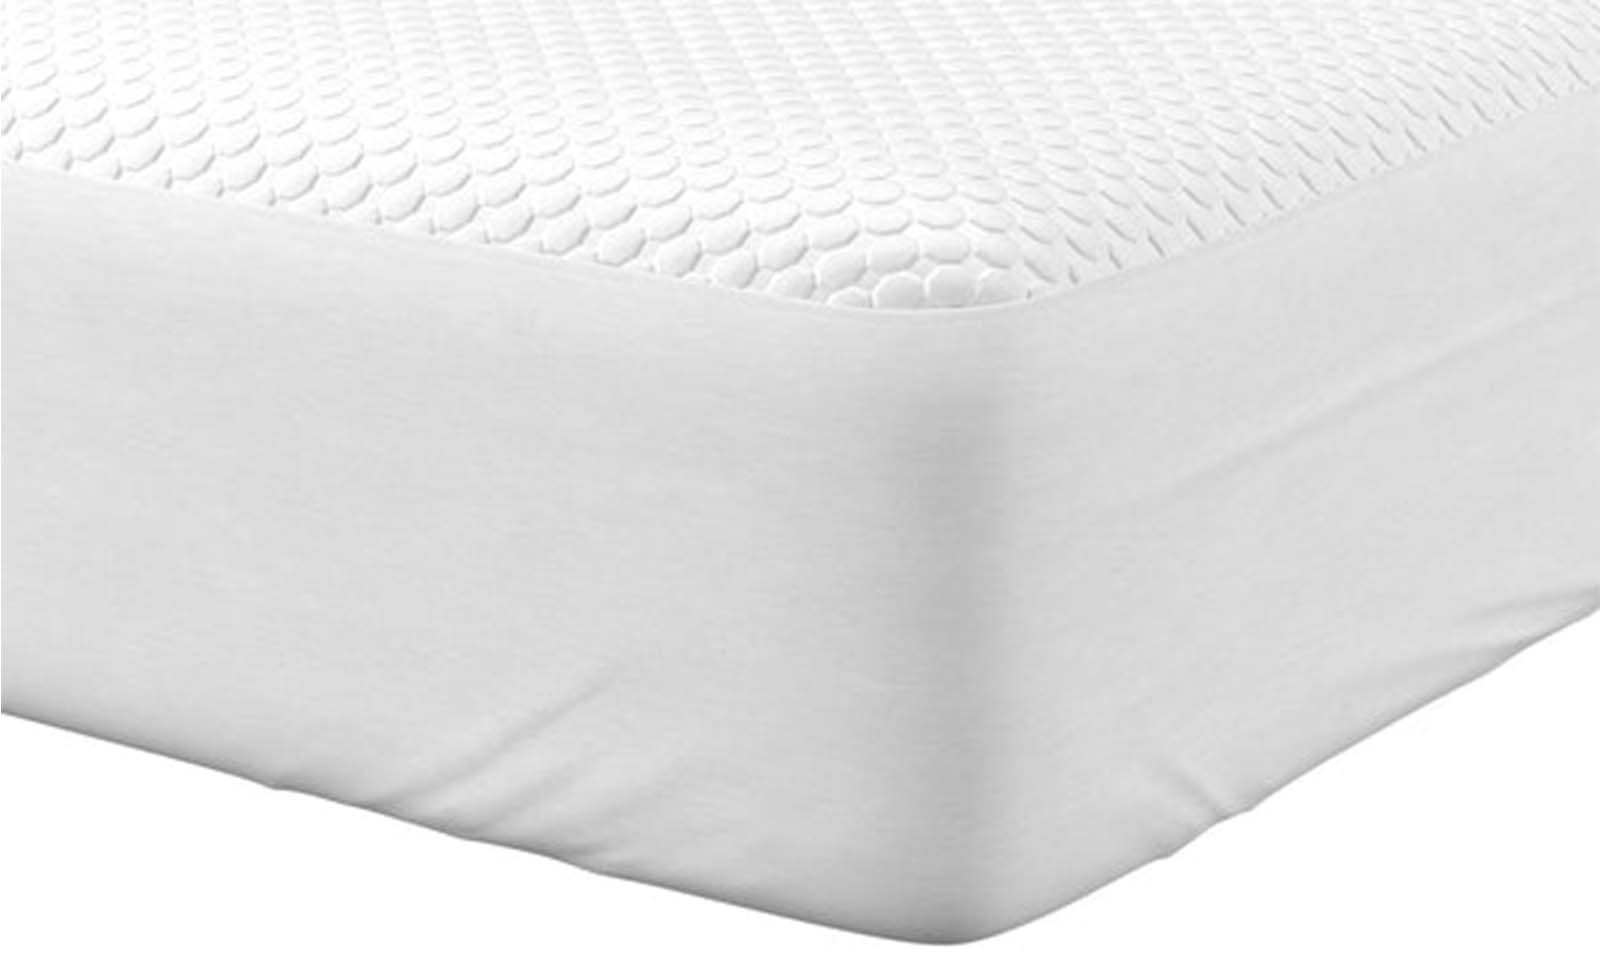 claritin mattress protector review